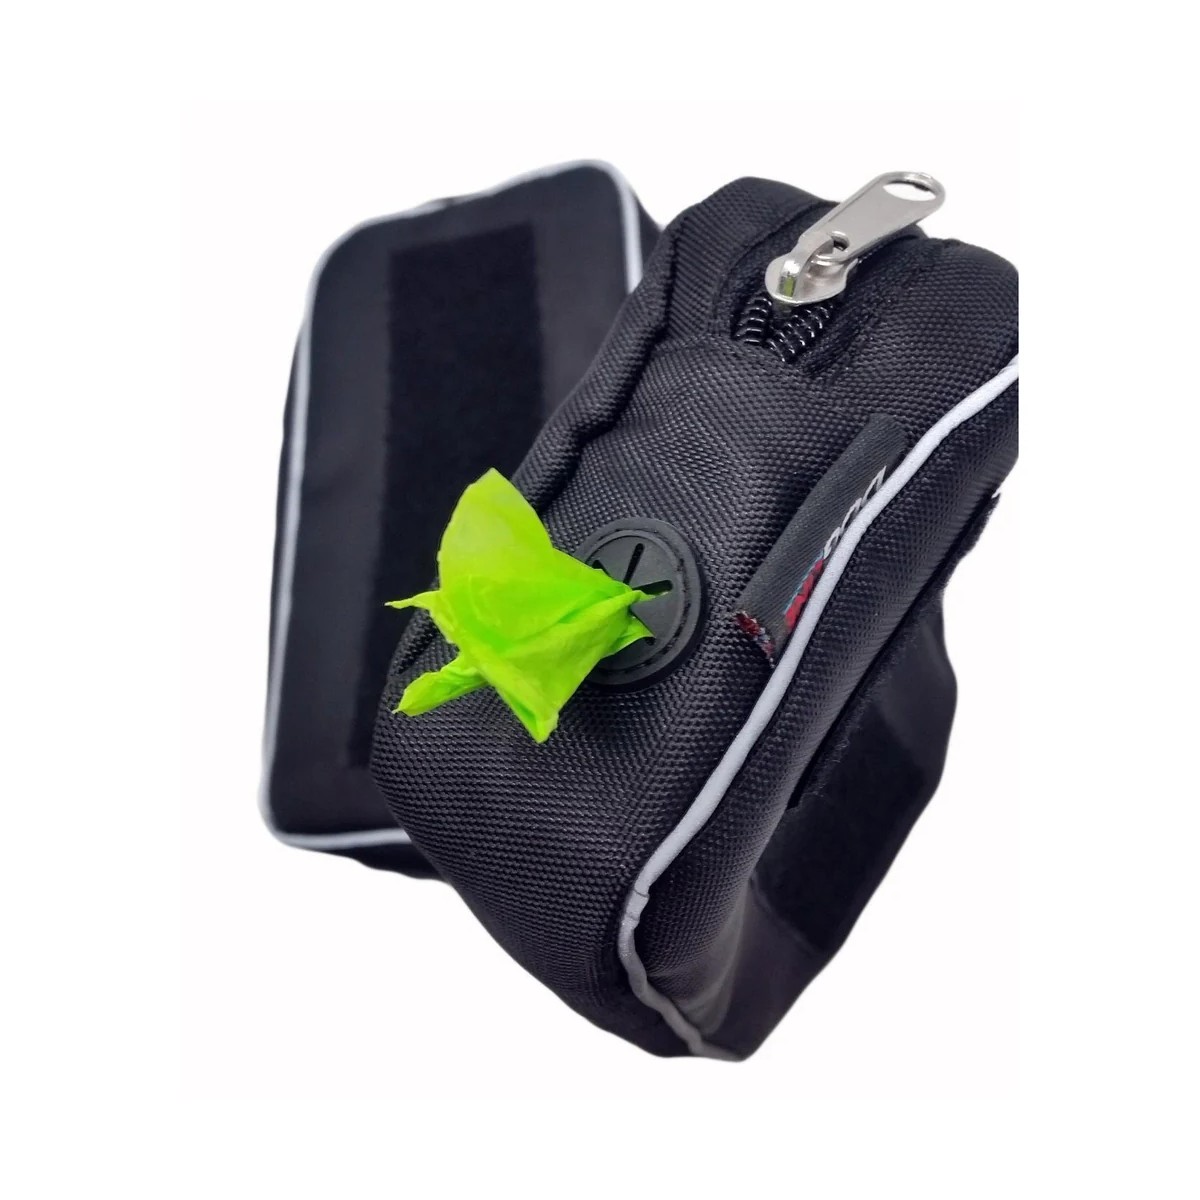 Dogline Saddle Bags Utility + Built-In Waste Bag Dispenser for Quest Dog Harness